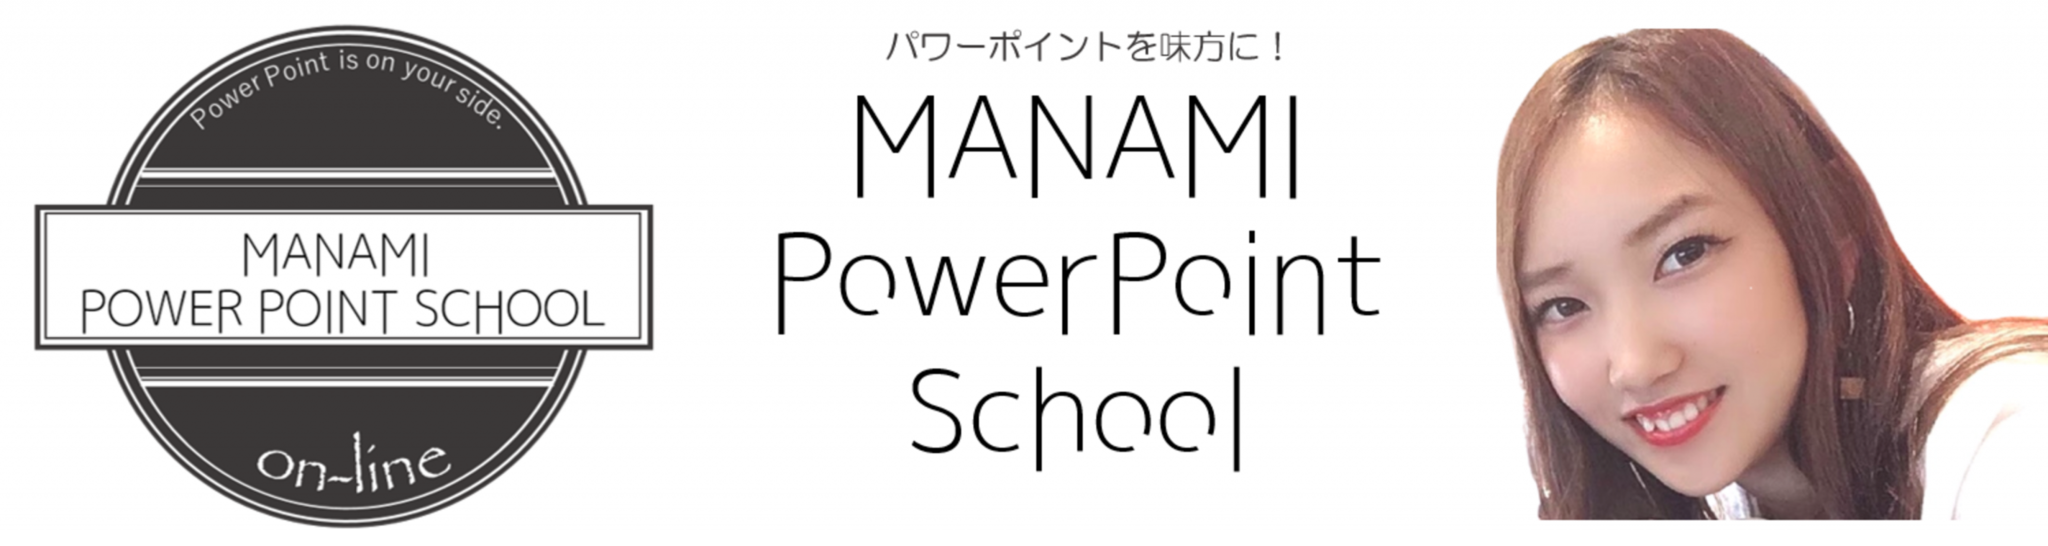 MANAMI PowerPoint School